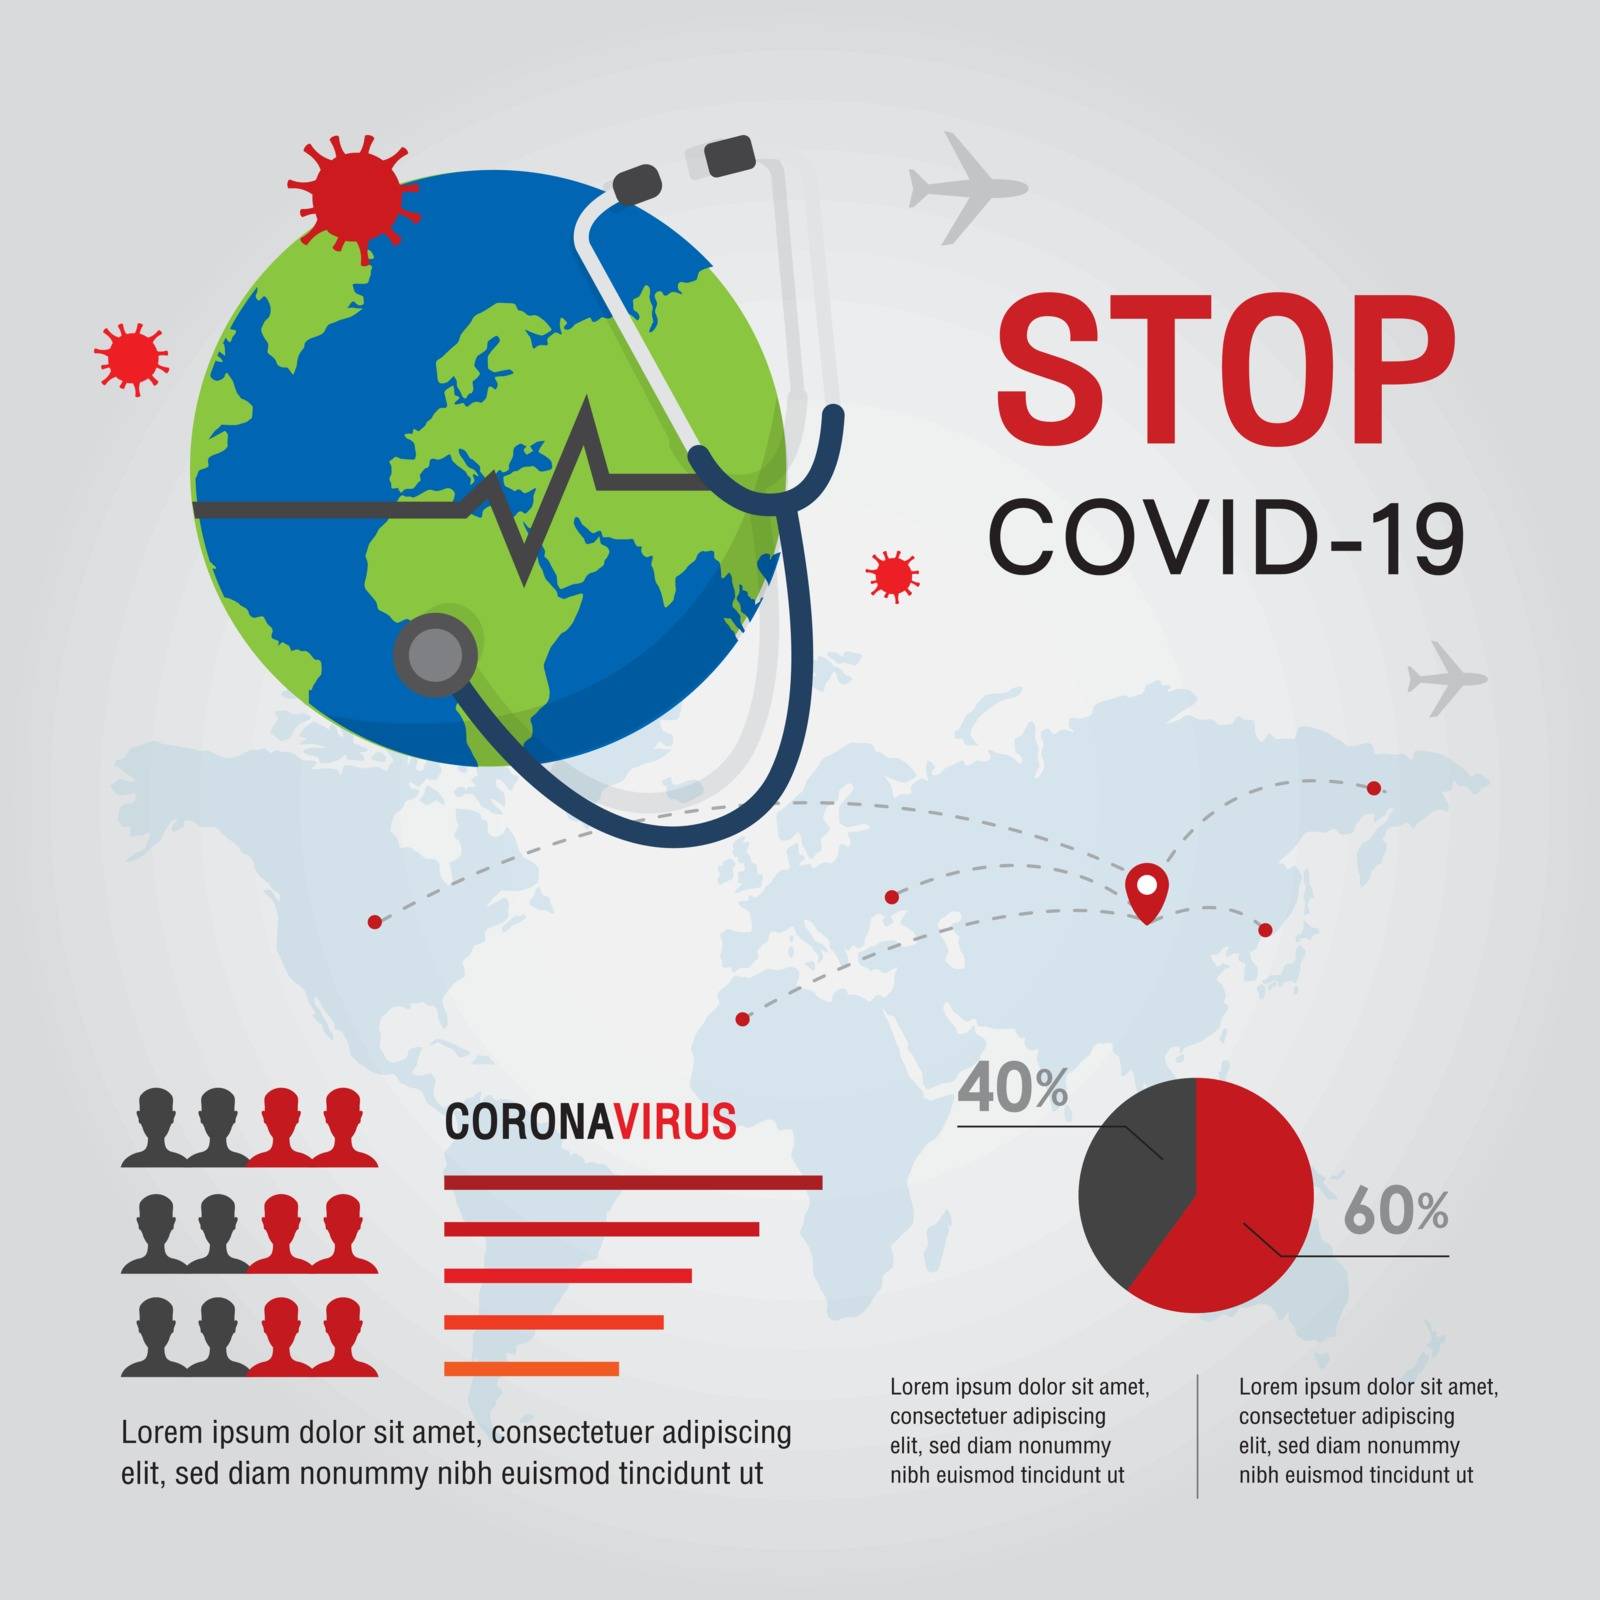 Coronavirus COVID-19 Flu spreading around the world. Stop Covid-19 Vector illustration.